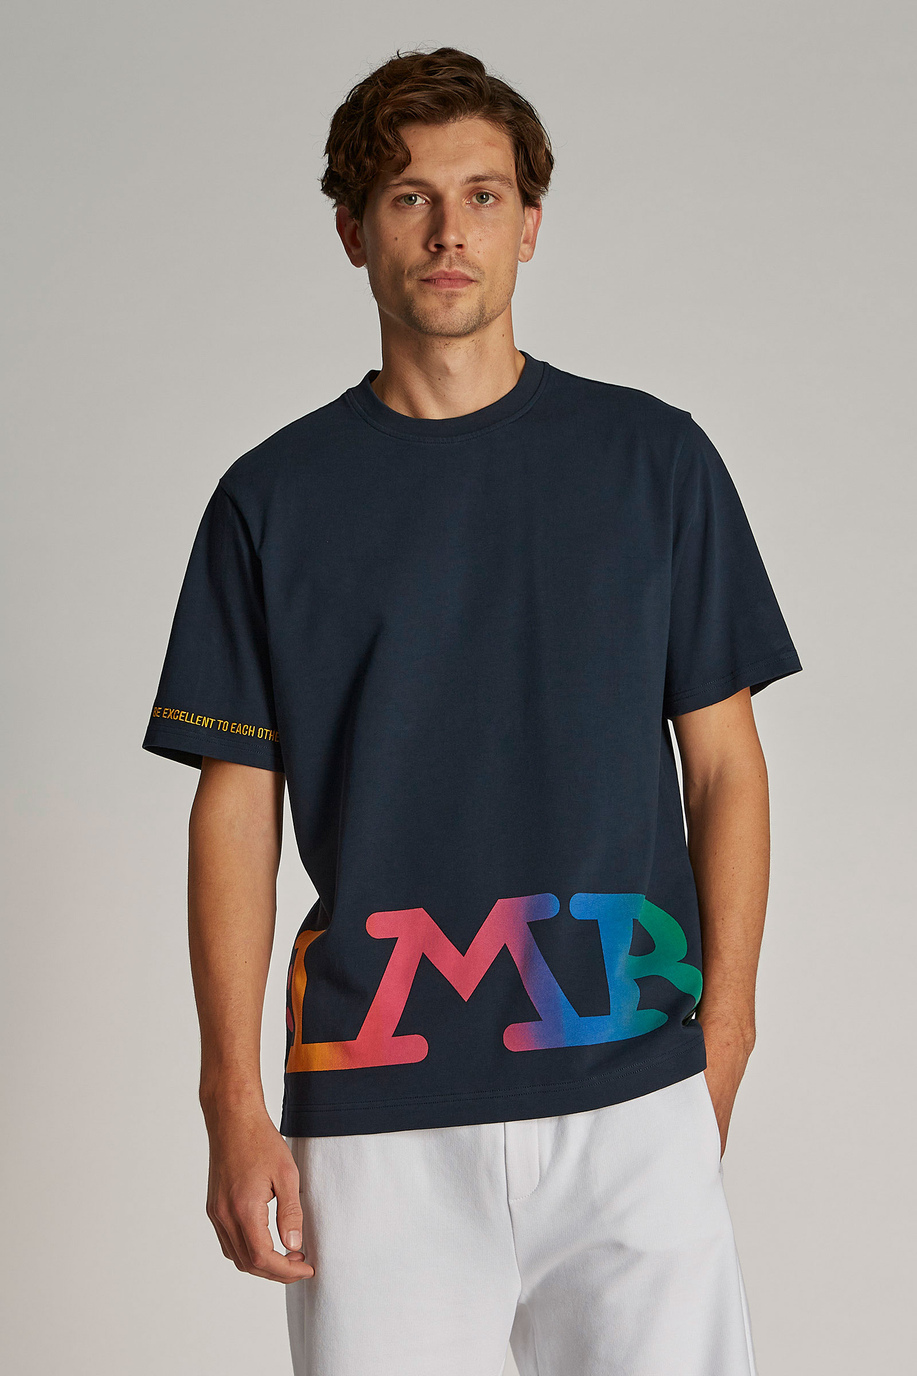 Herren-T-Shirt mit kurzem Arm, oversized Modell - T-shirts | La Martina - Official Online Shop